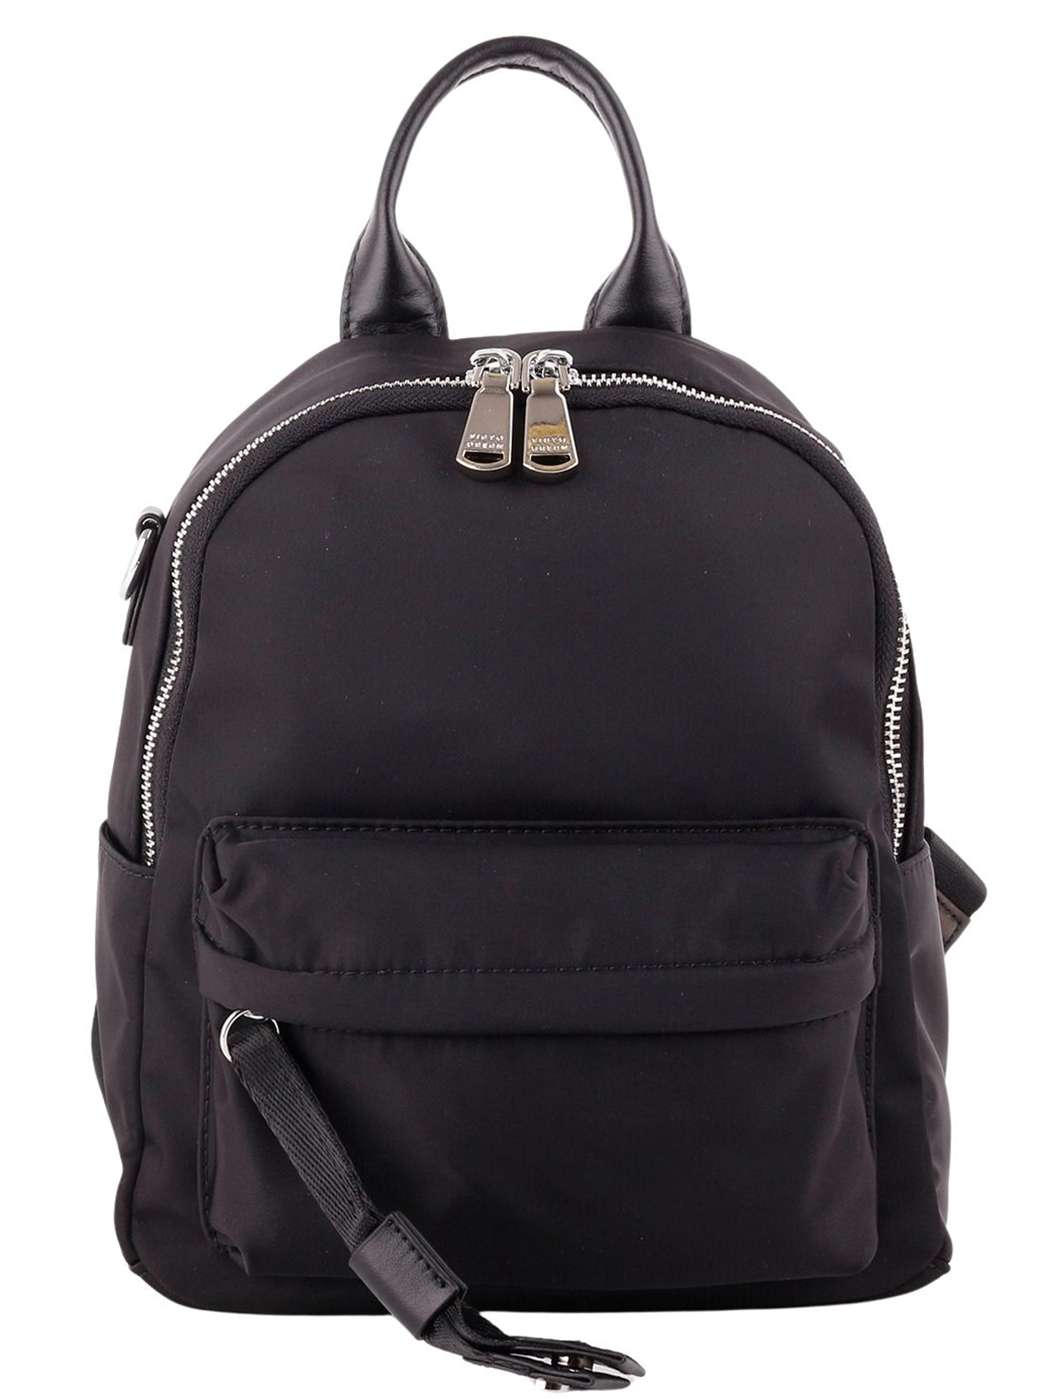 Рюкзак женский Fiato Dream 5521 черный, 25х21х10 см